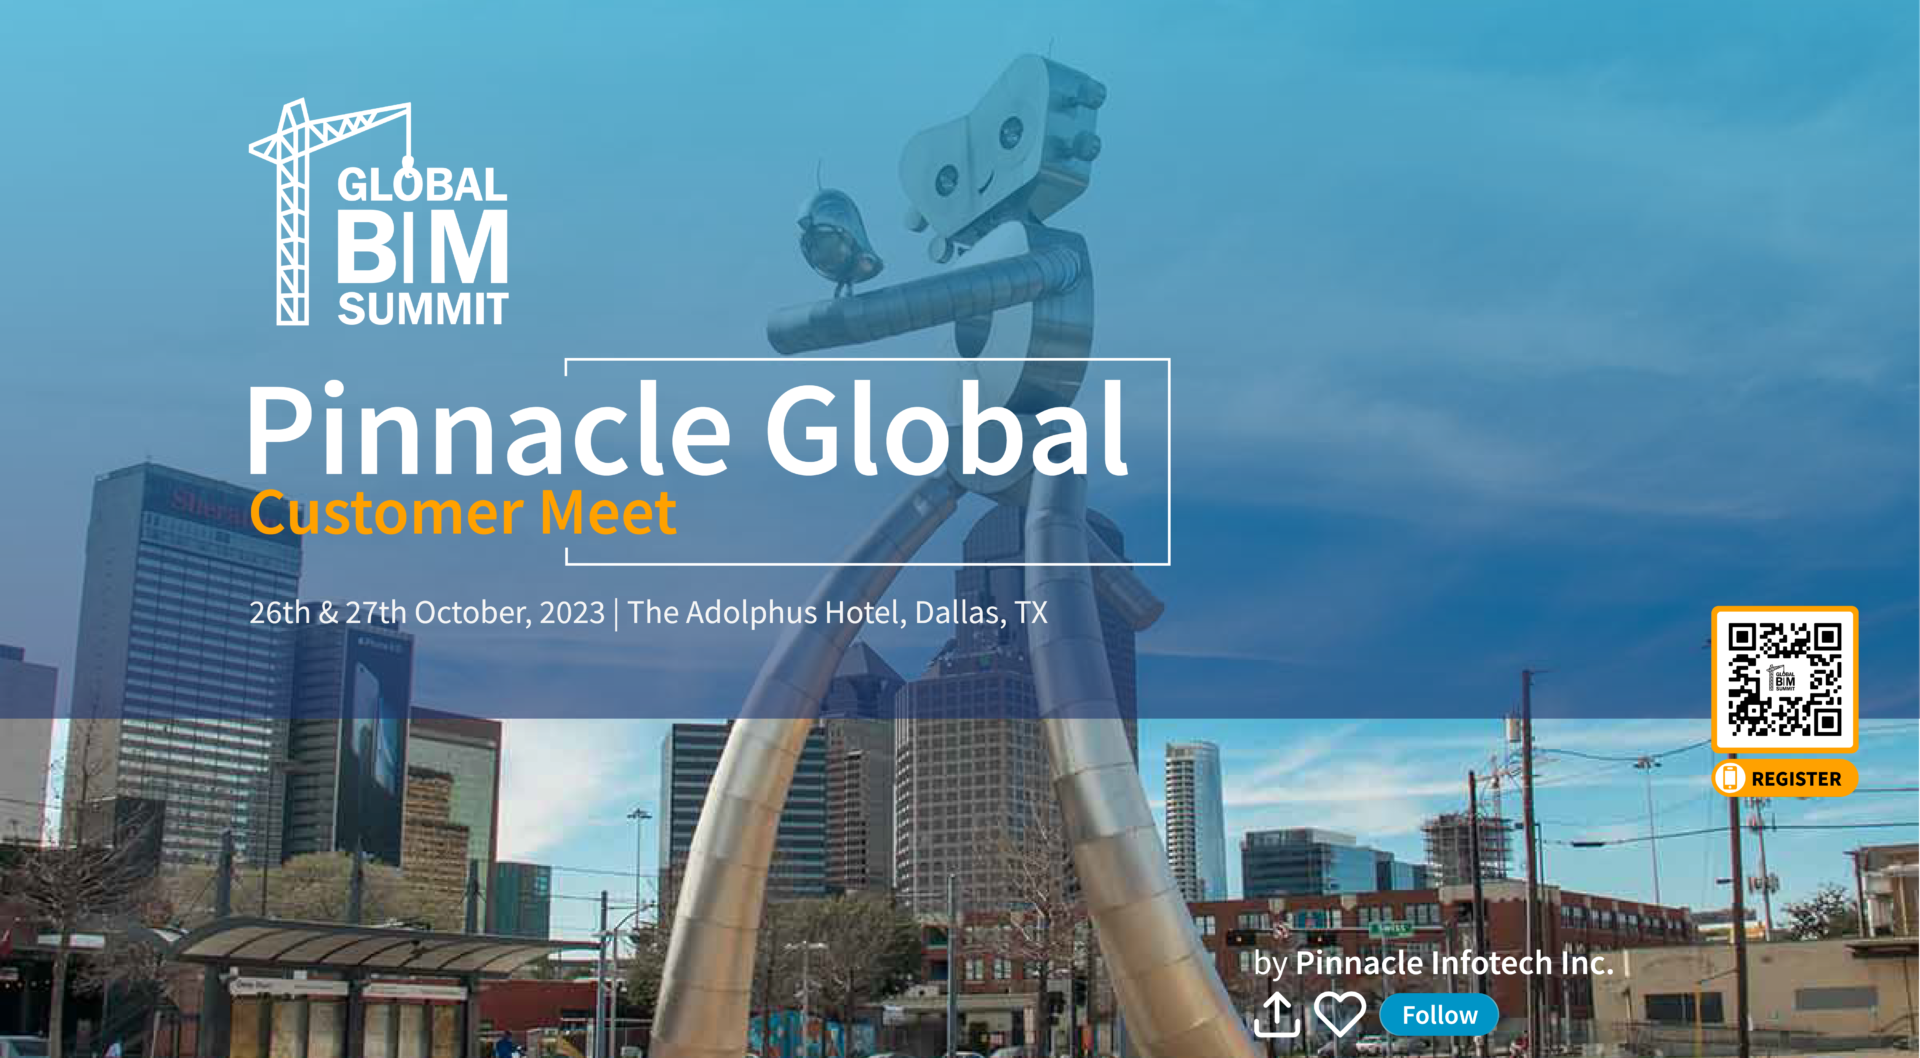 Pinnacle's 5th Global BIM Summit event cover image